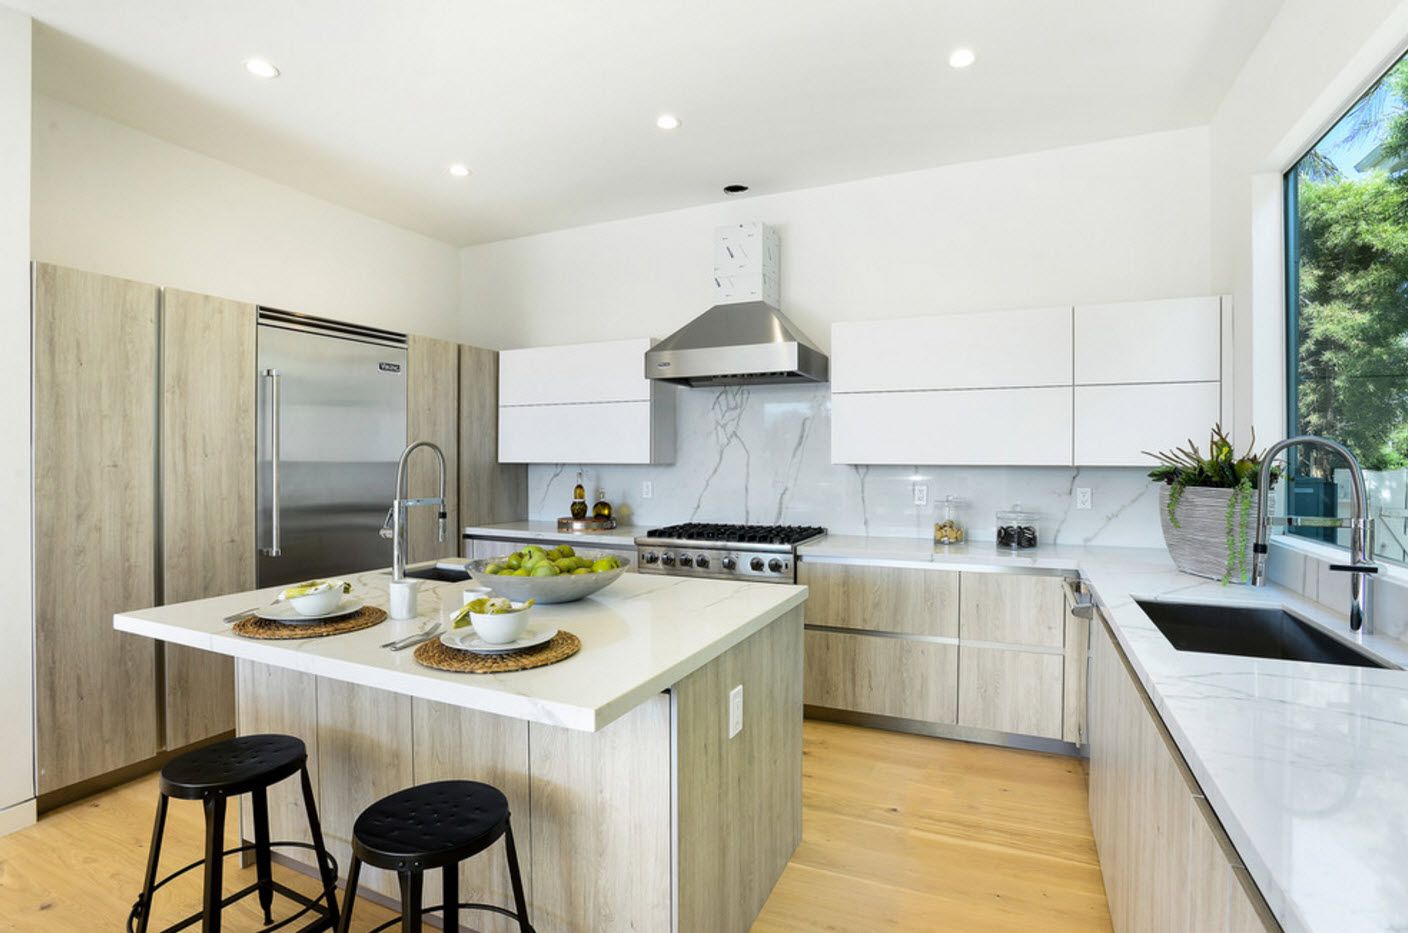 140 square feet kitchen modern design ideas & layout types